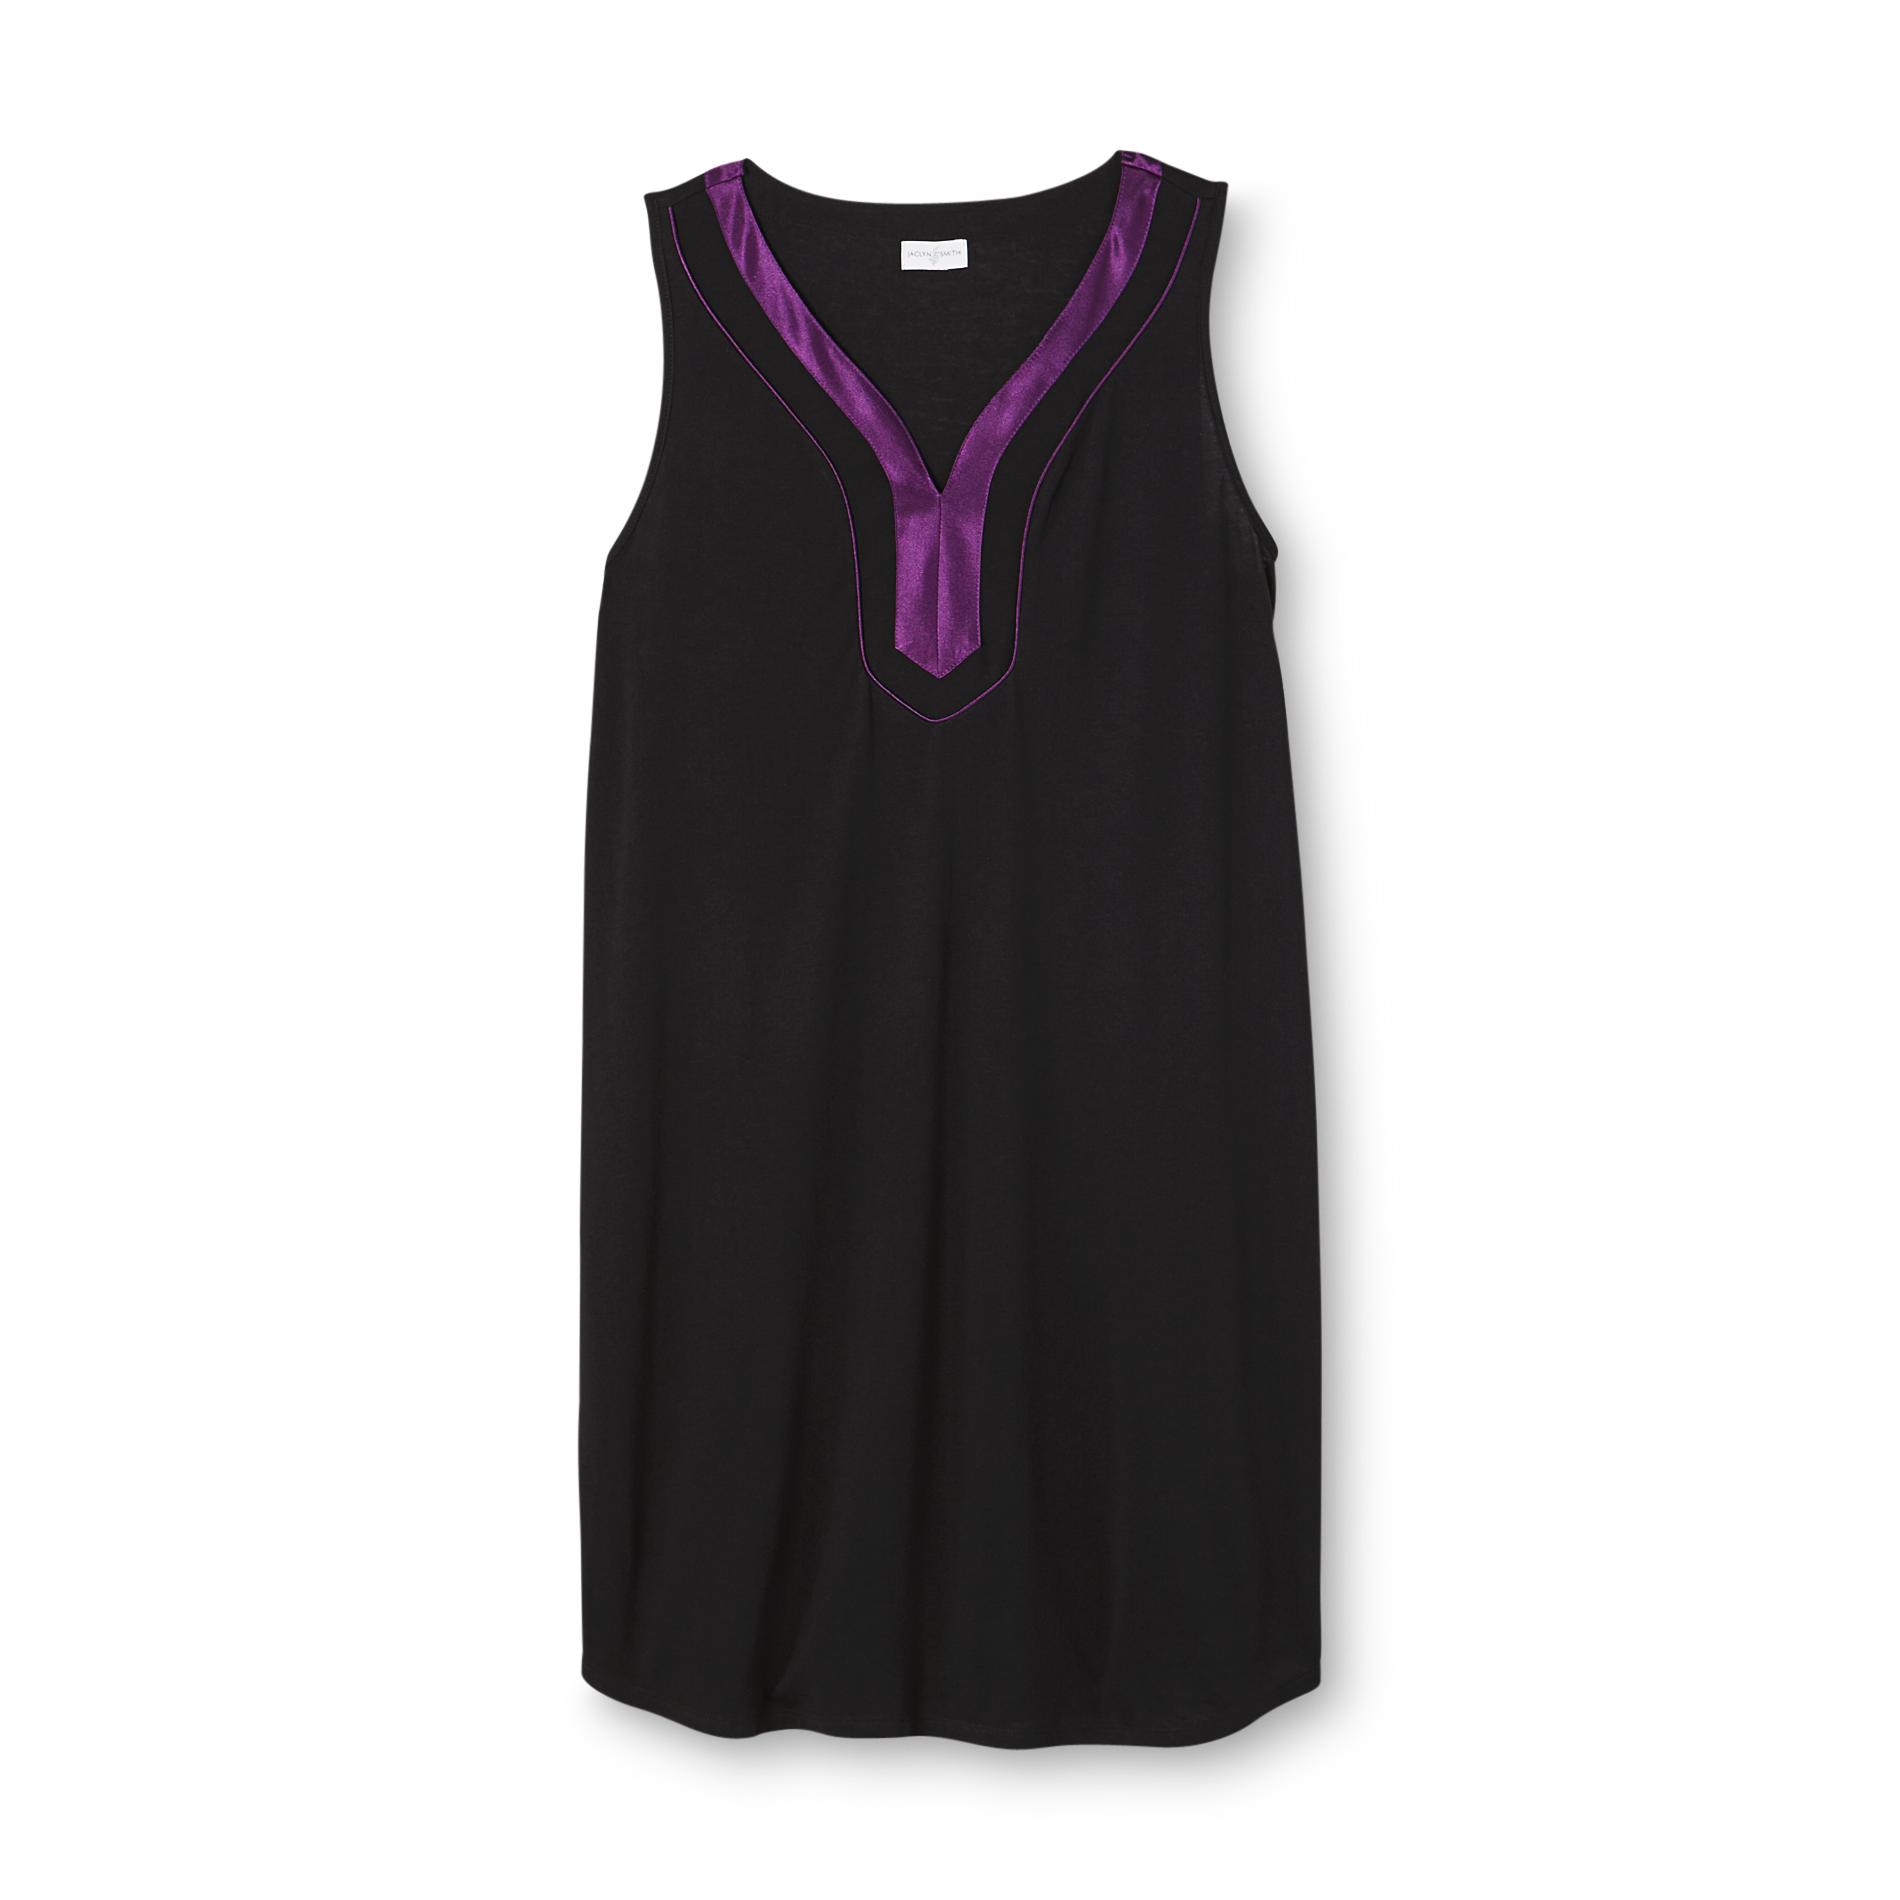 Jaclyn Smith Women's Sleeveless Nightgown